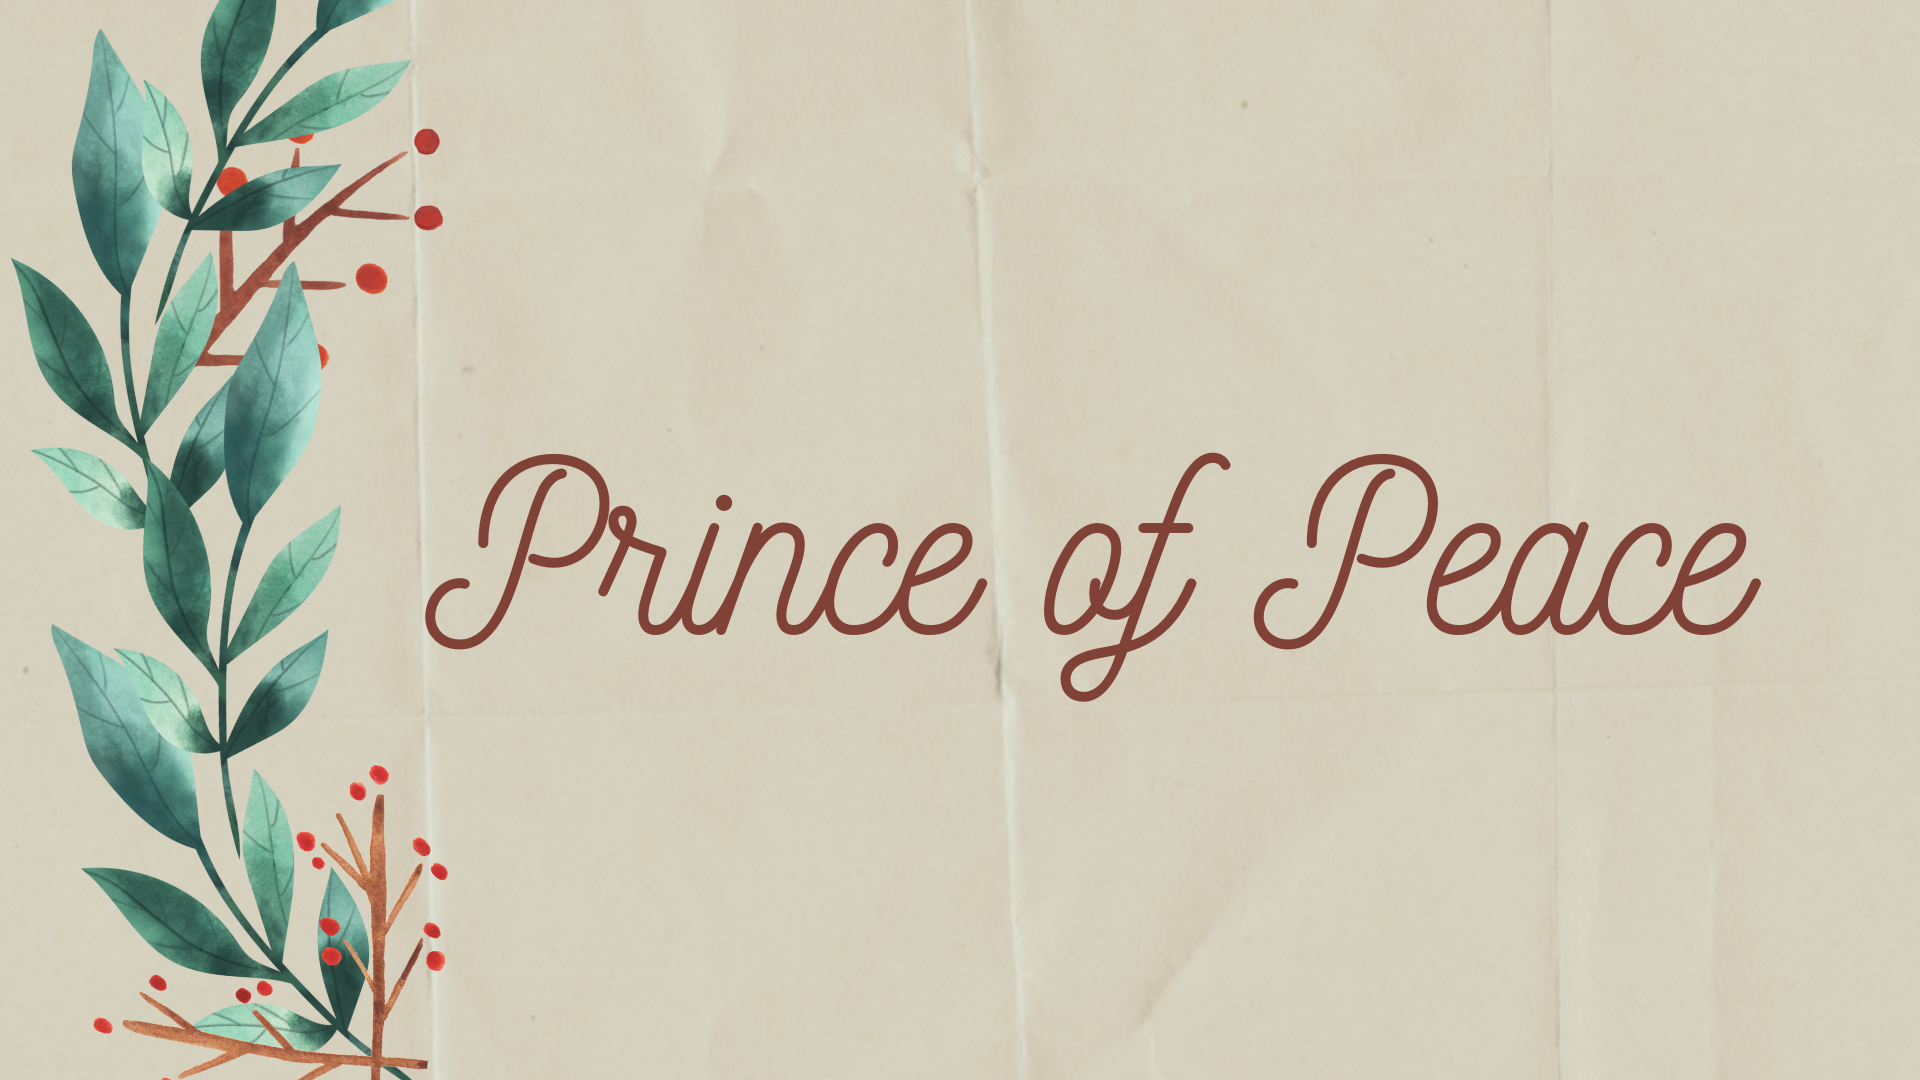 Prince of Peace